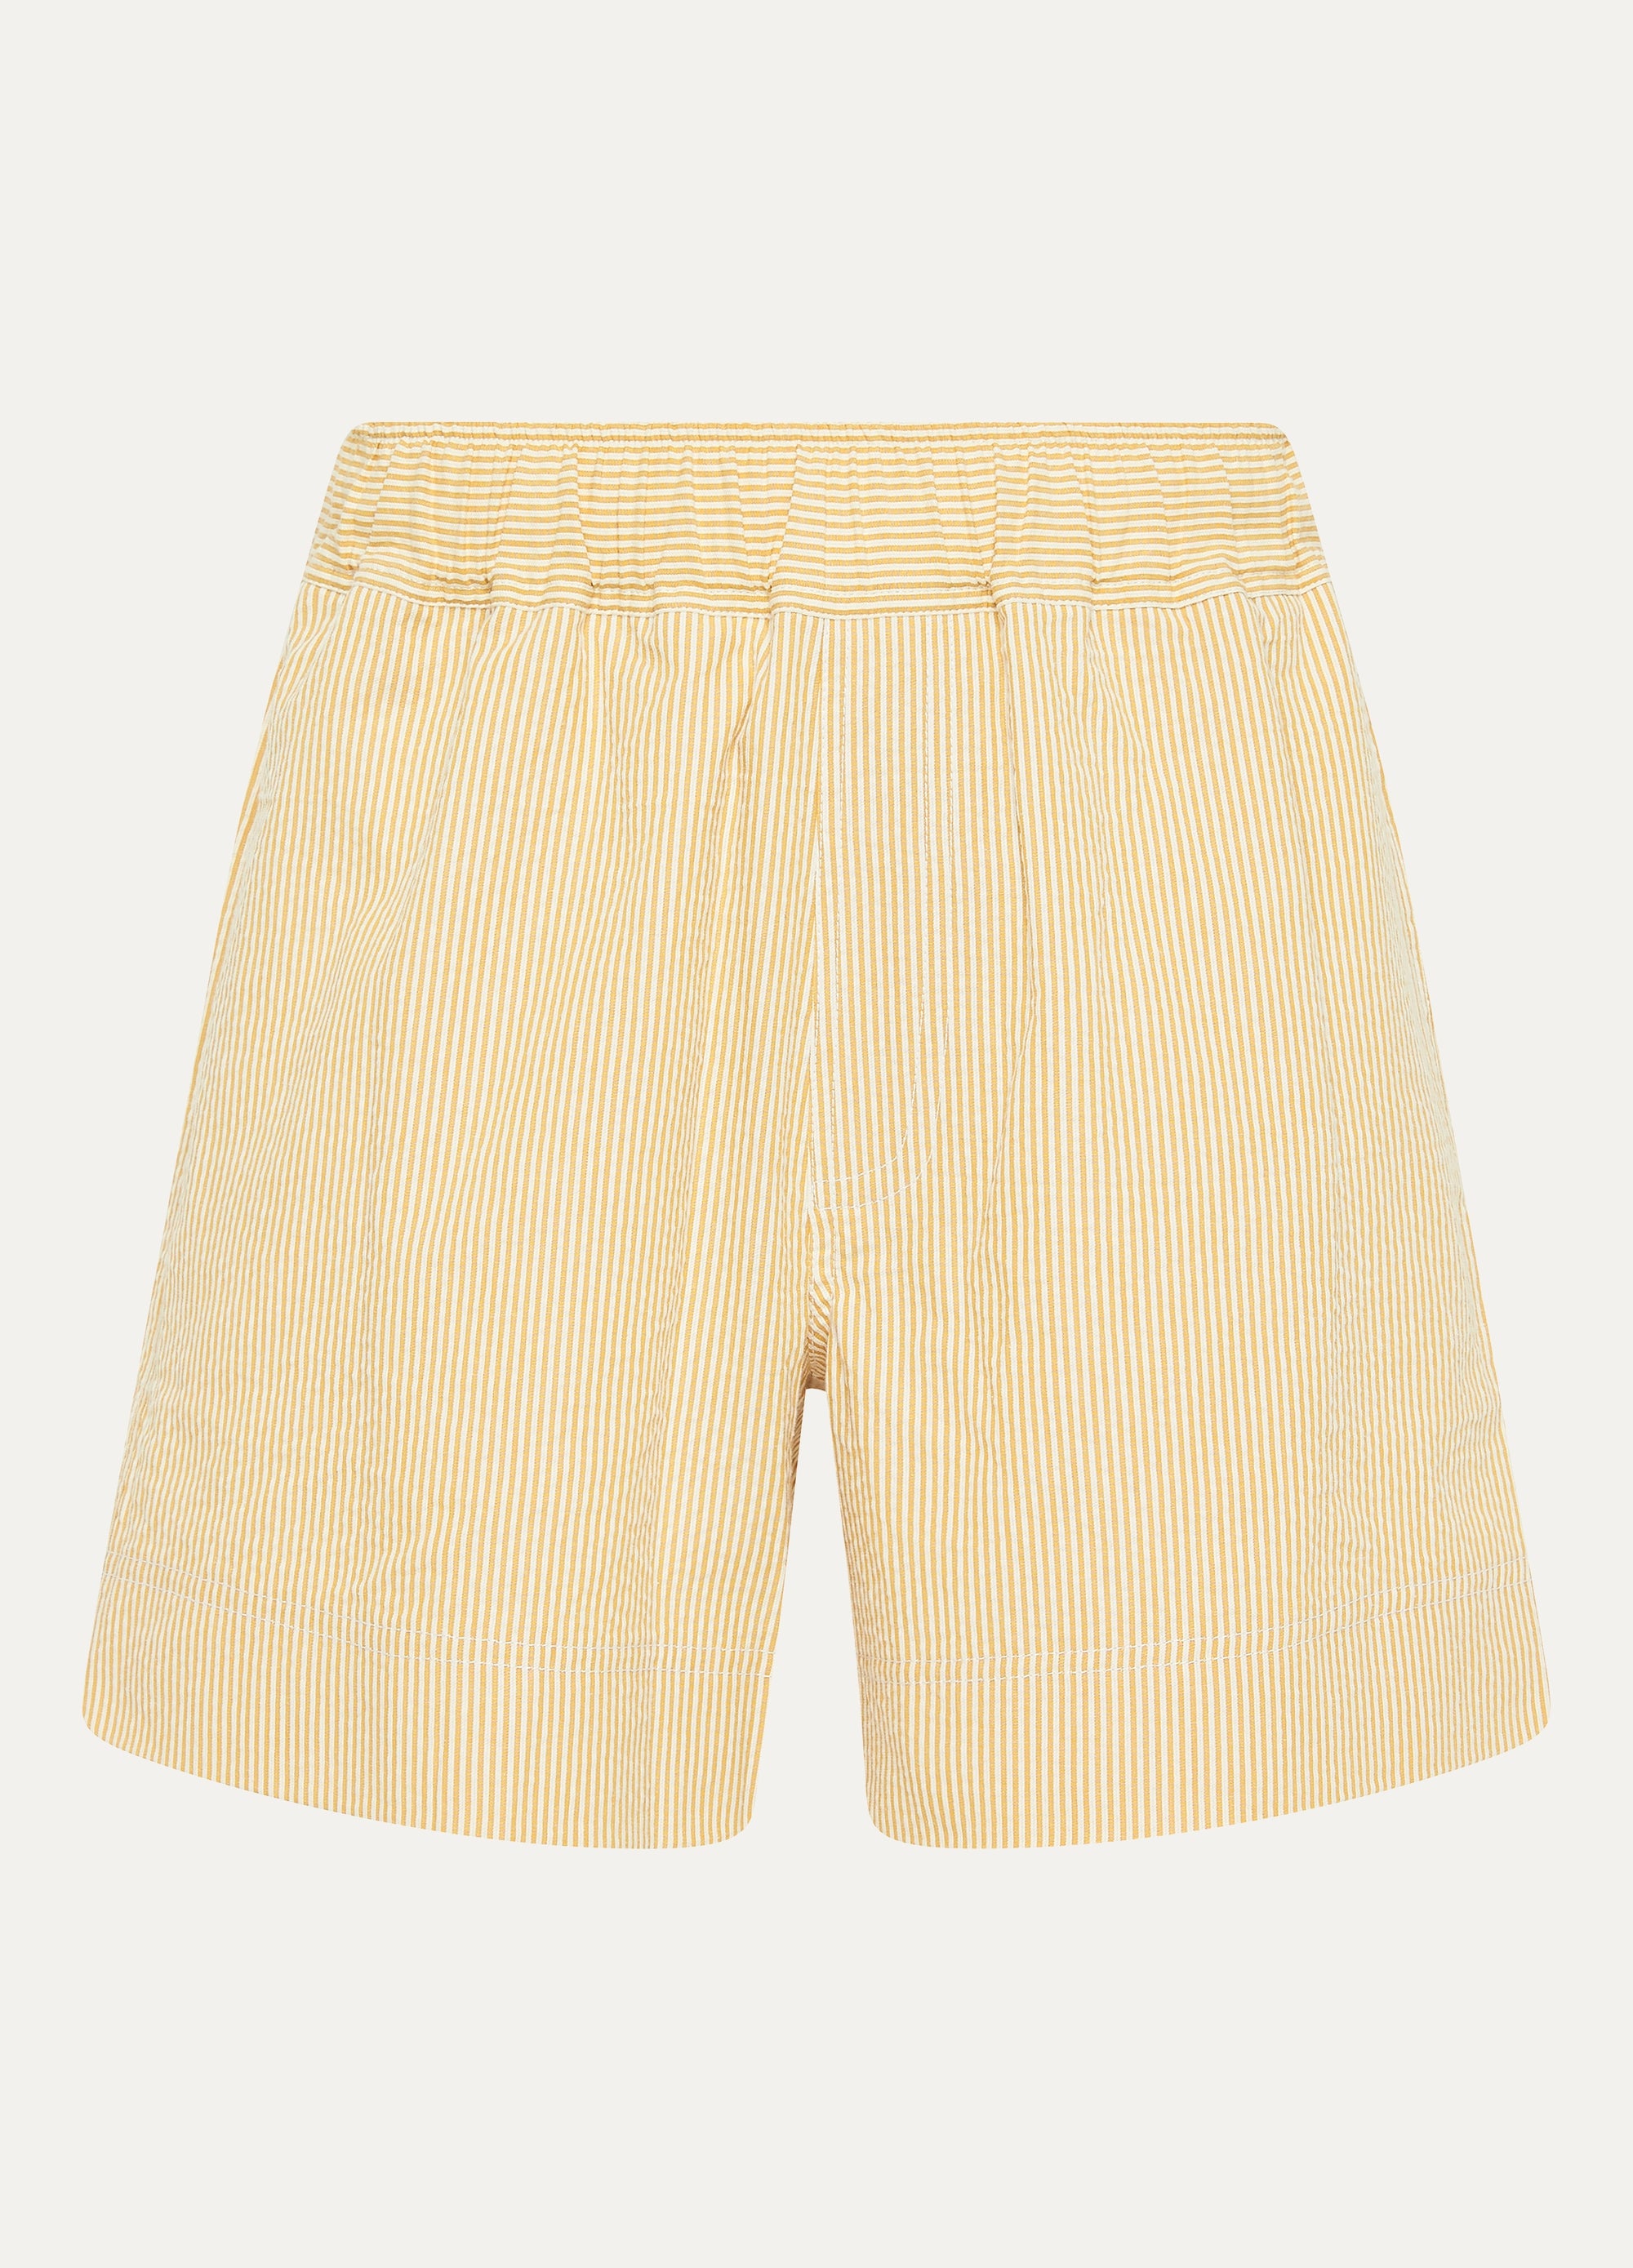 Japanese Yellow Stripe Short